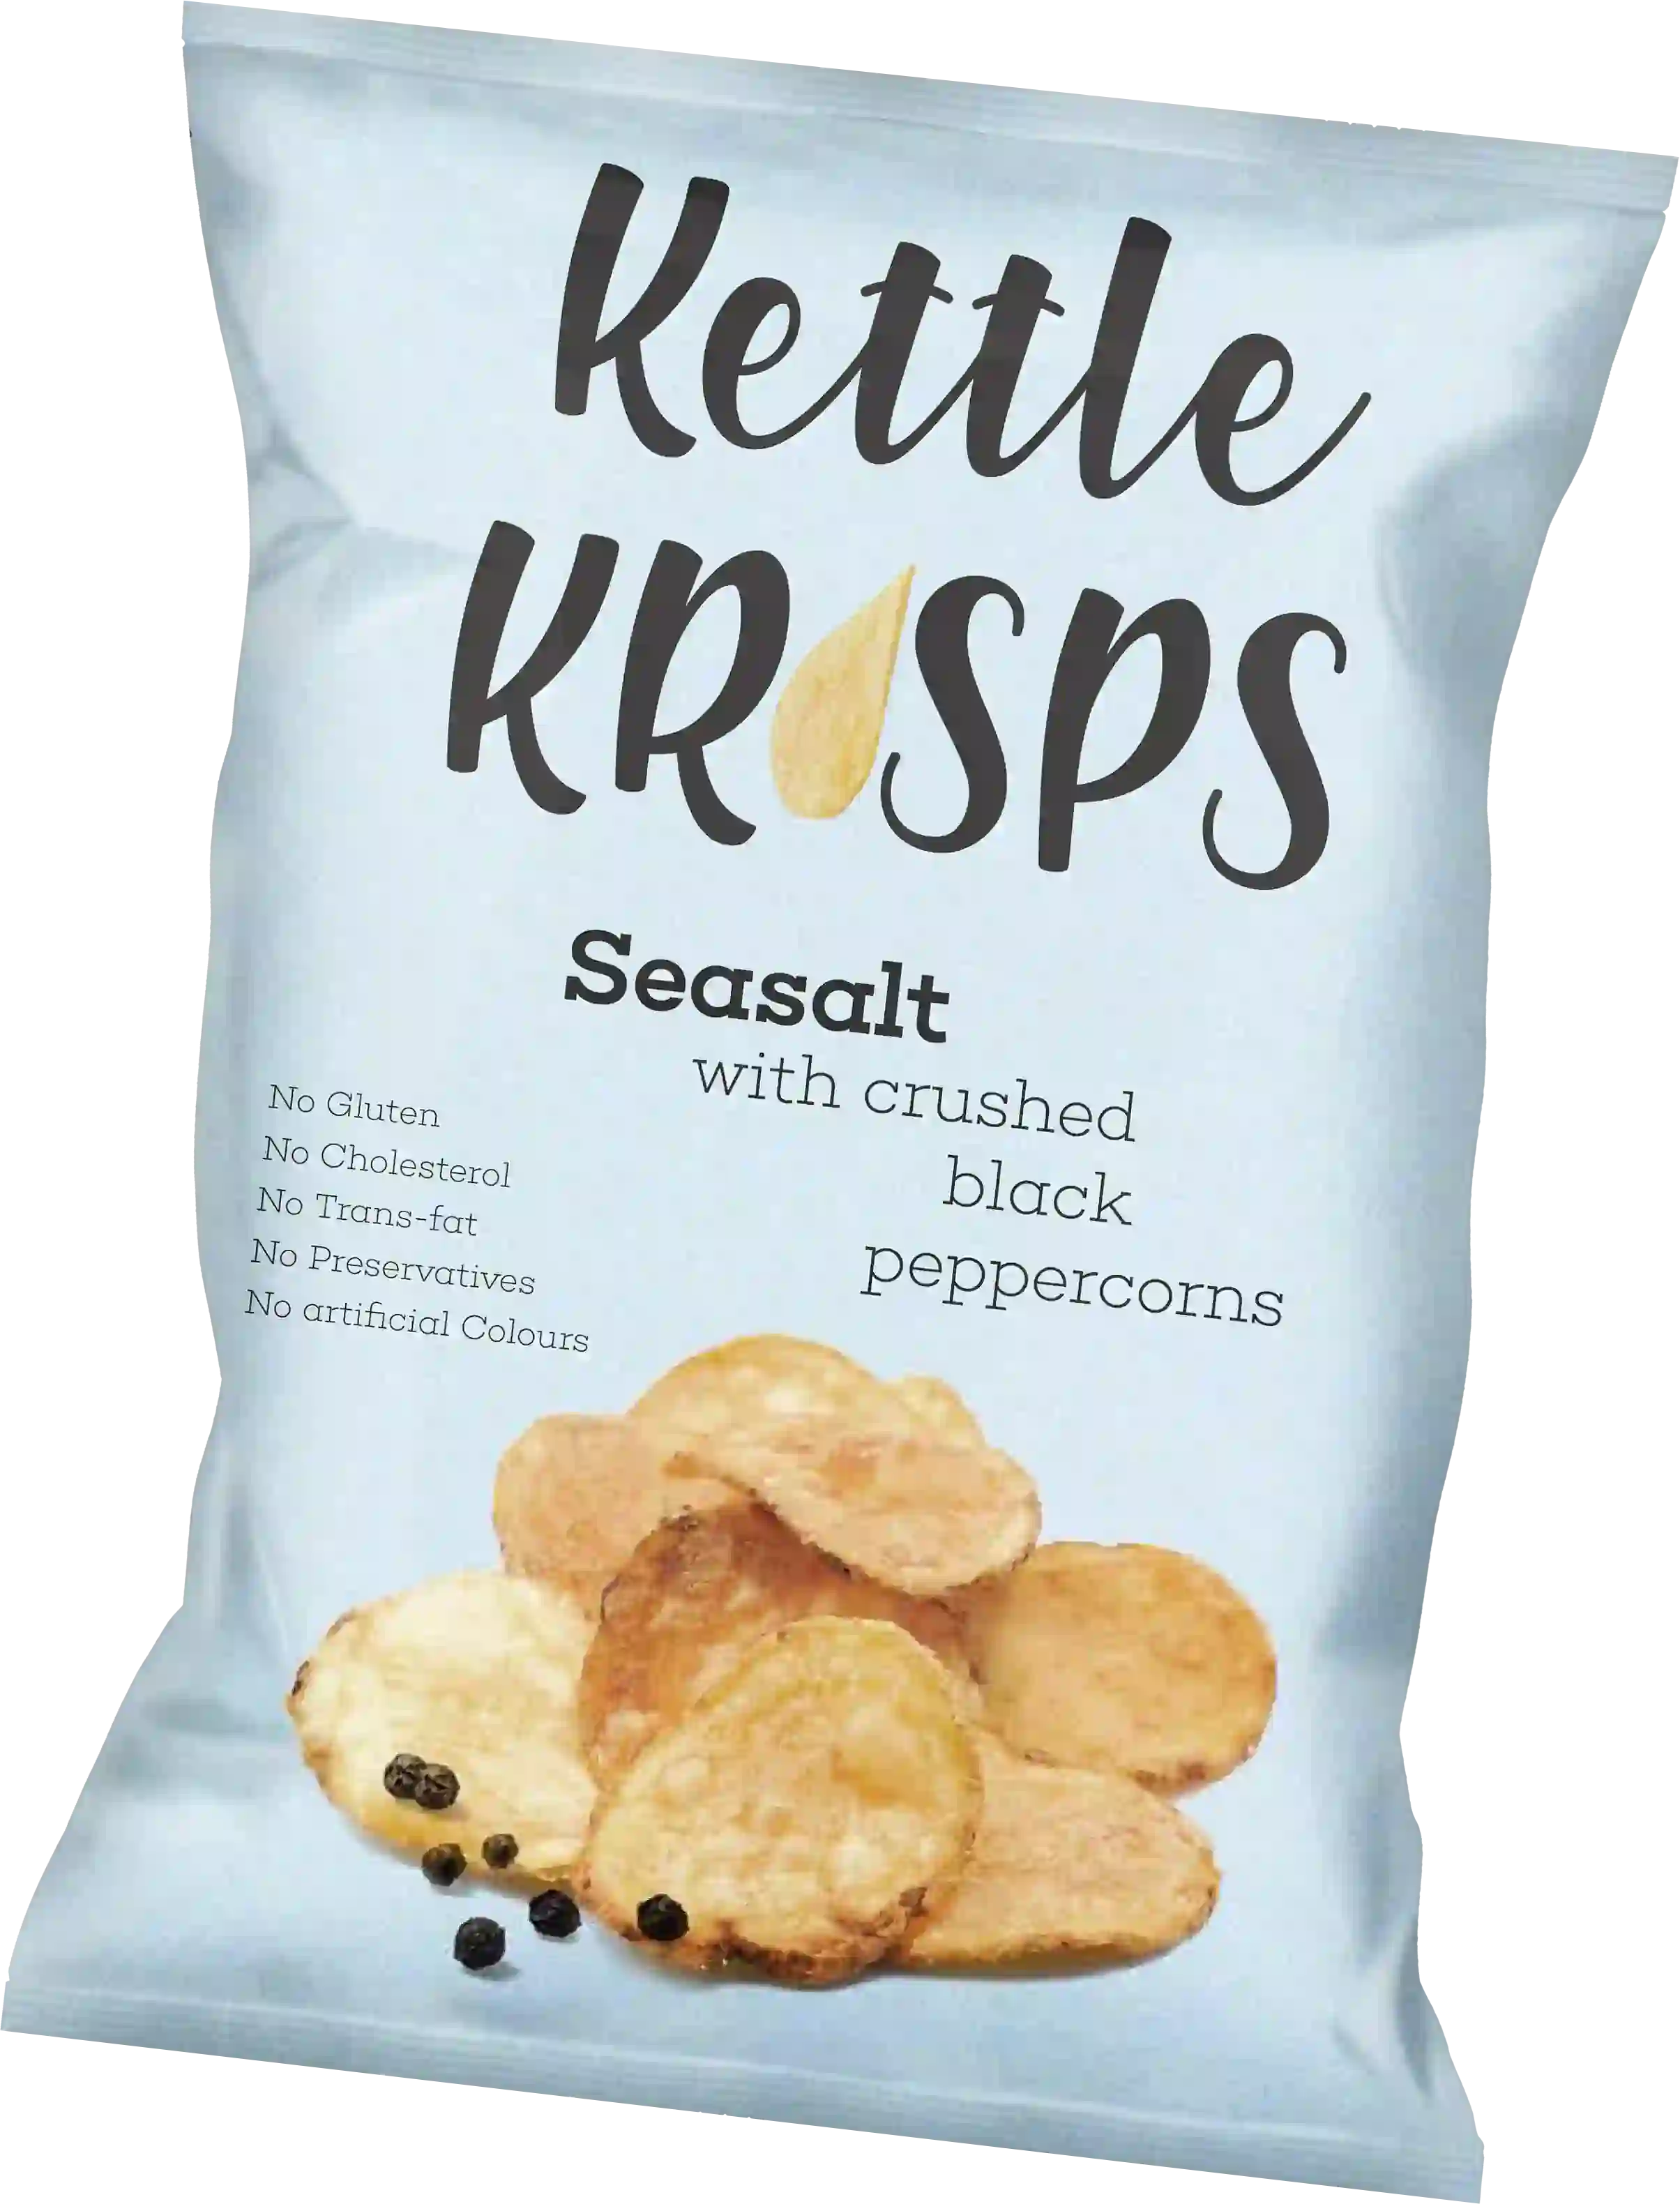 Kettle Krisps Seasalt &Crushed peppercorns CARTONS